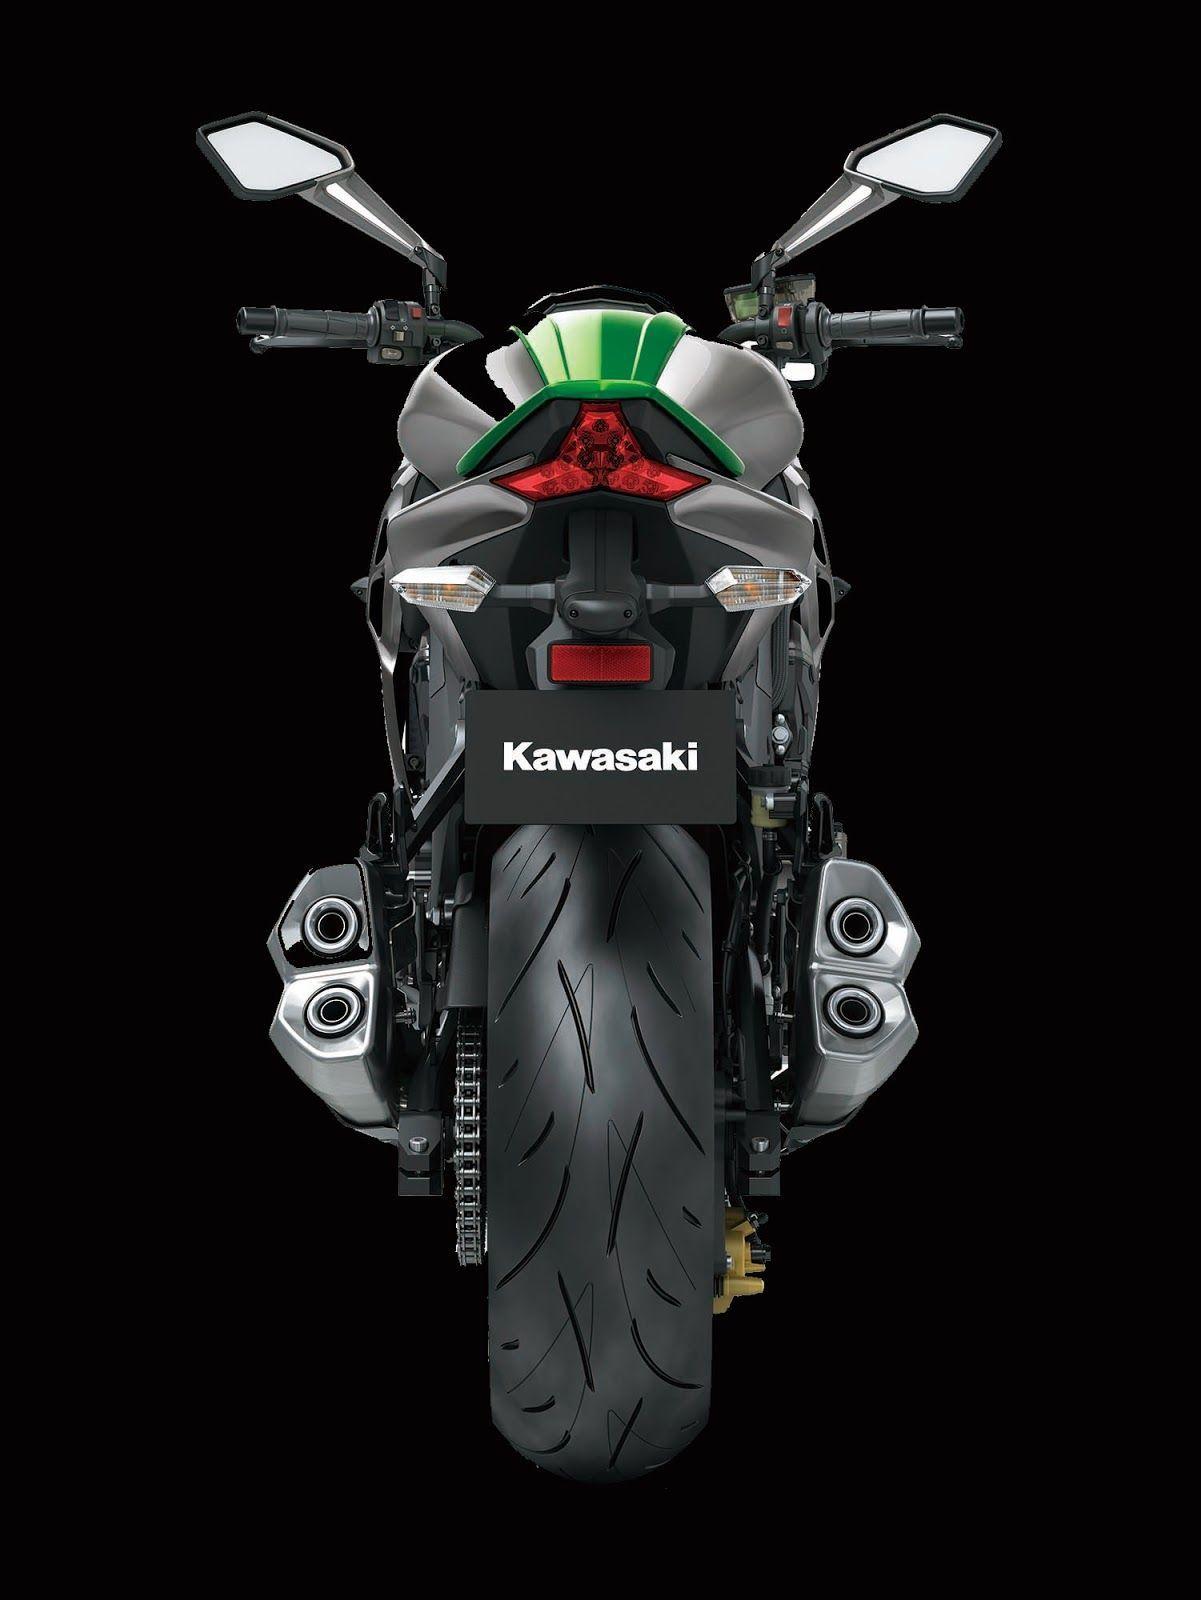 Kawasaki Z1000 india HD picture, Wallpaper, Stills, Image